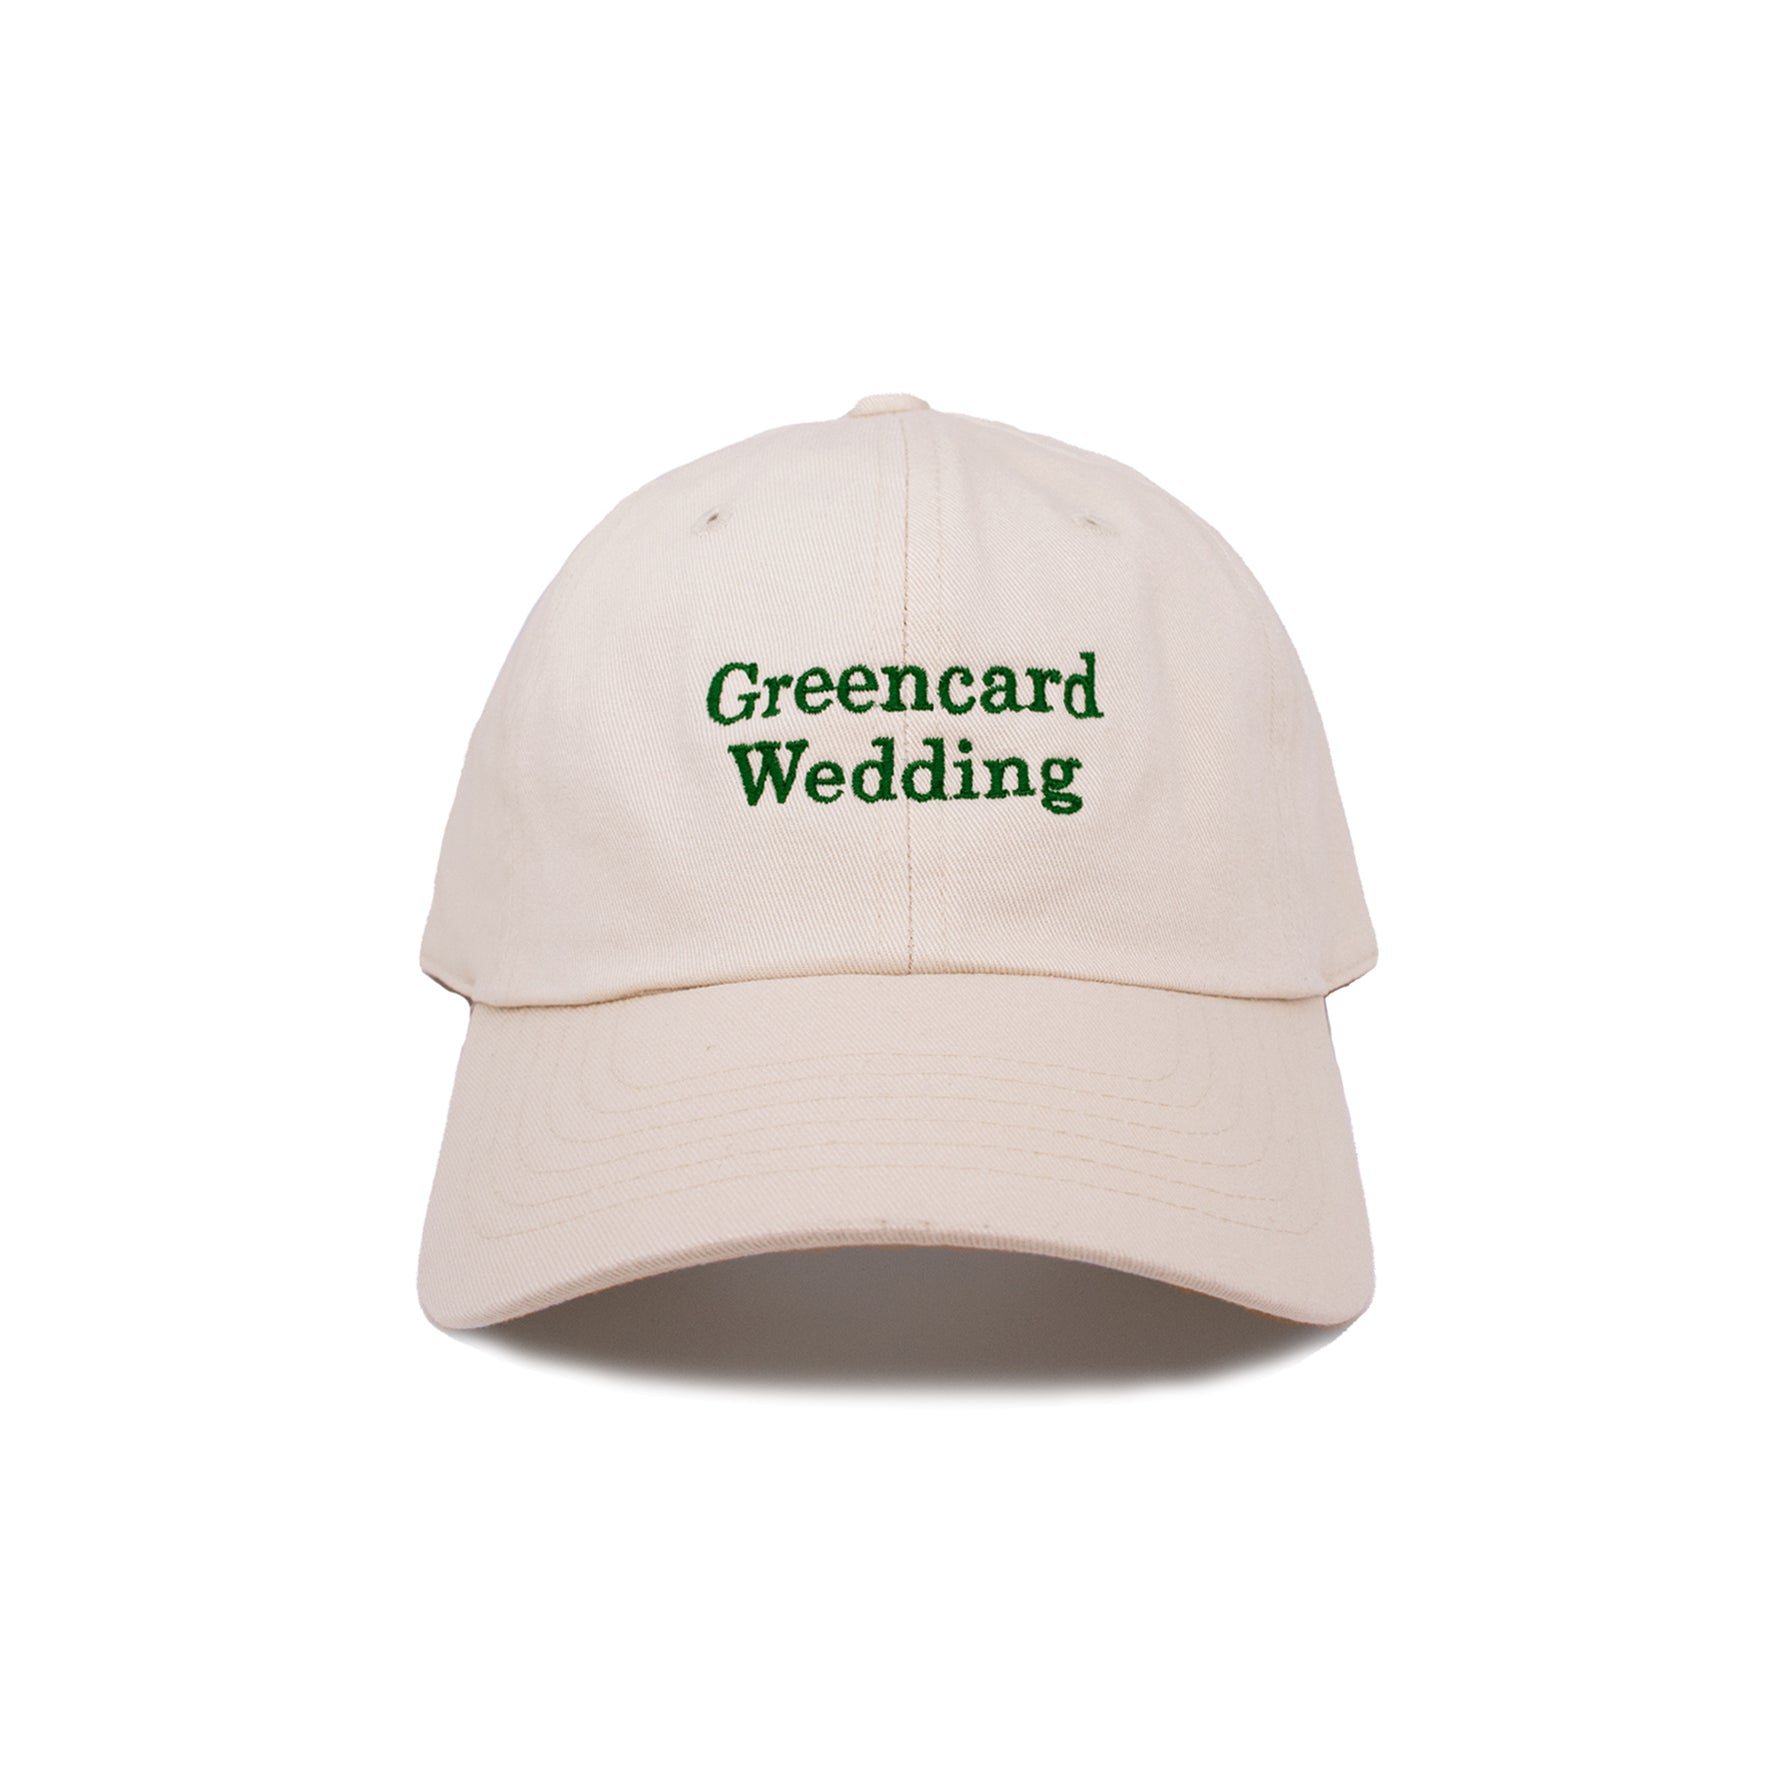 GREENCARD WEDDING